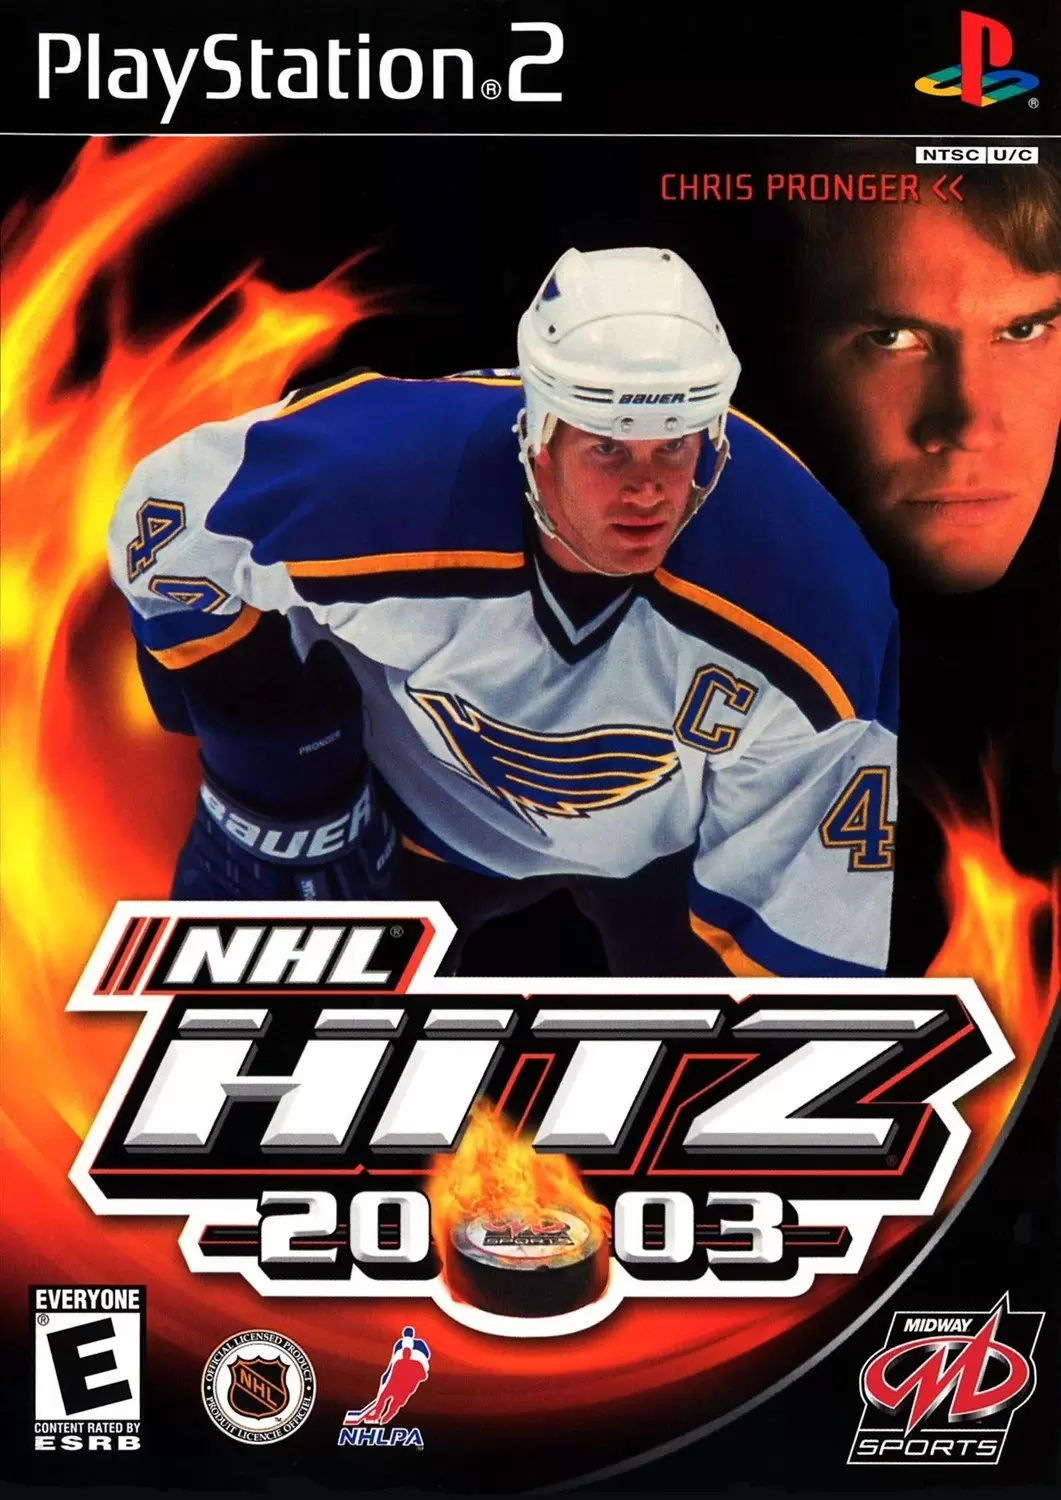 PS2 Games - NHL Hitz 2003